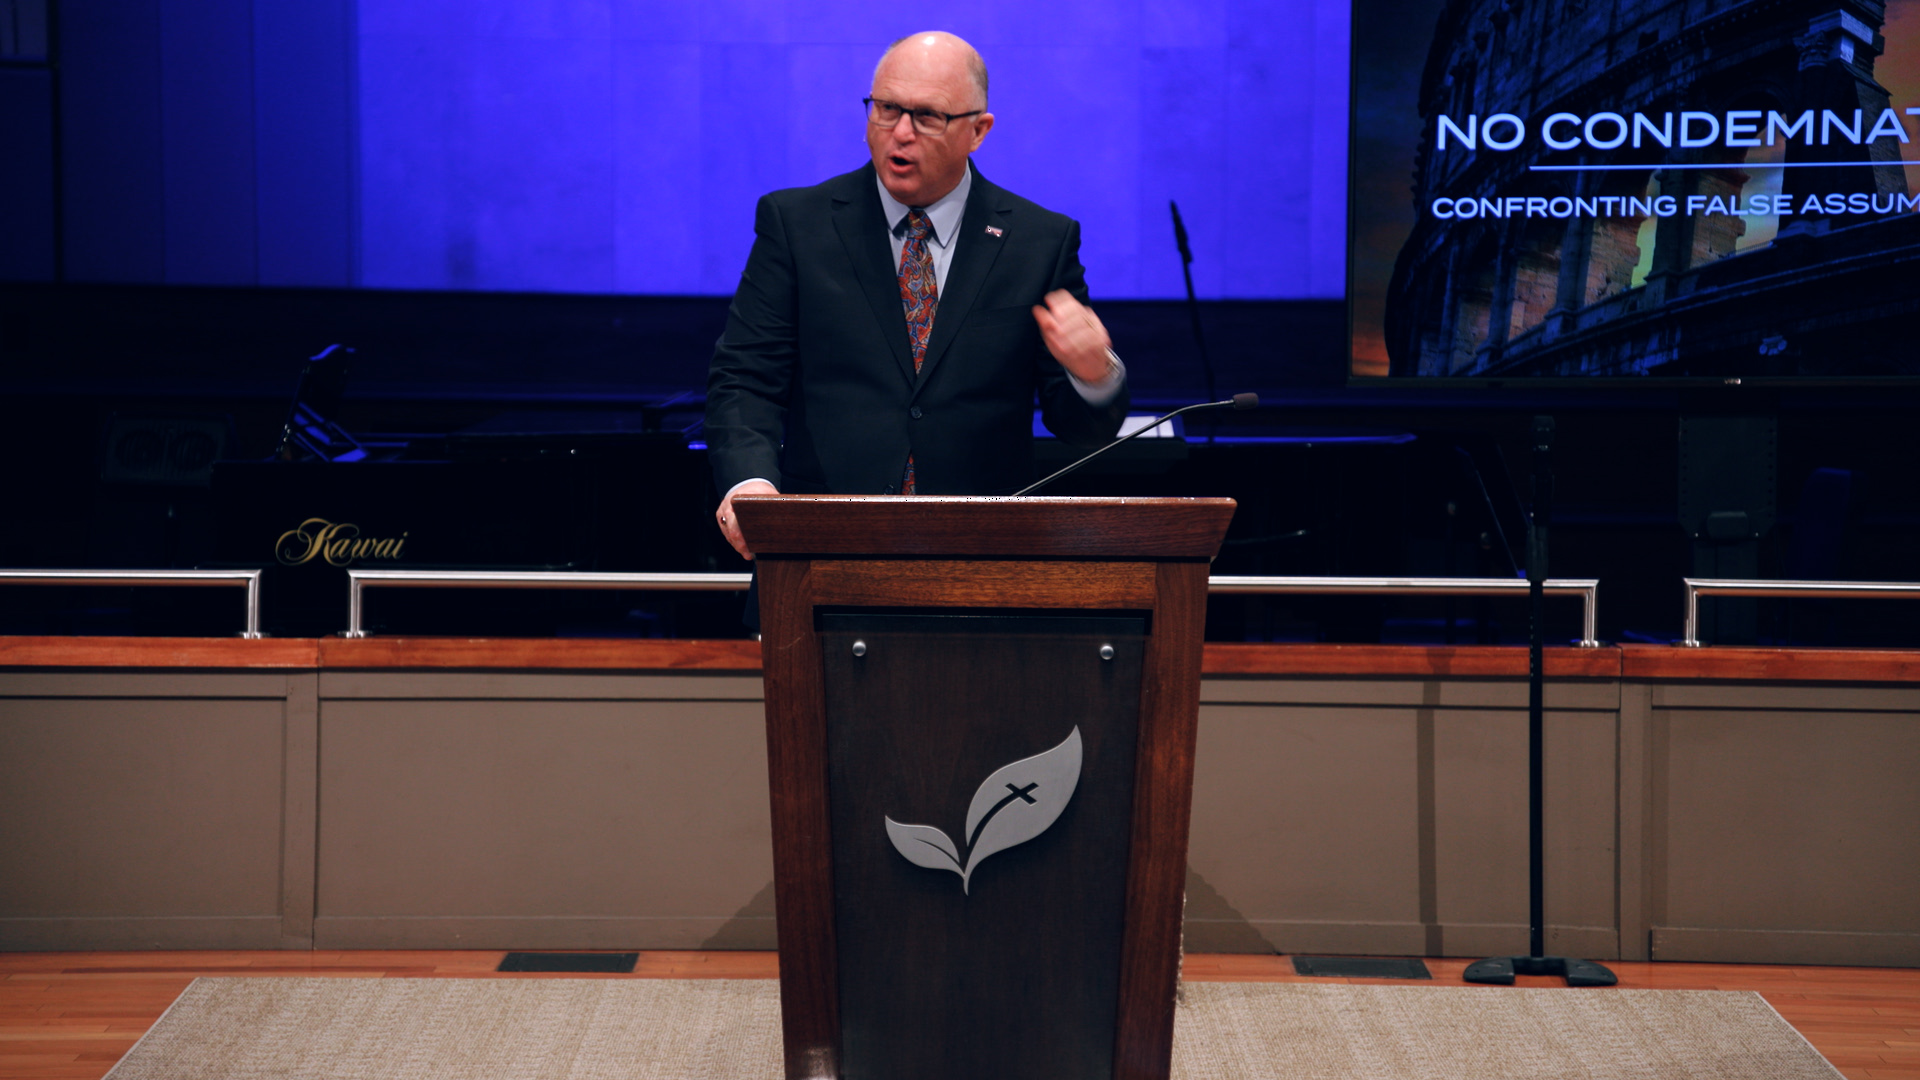 Pastor Paul Chappell: Confronting False Assumptions